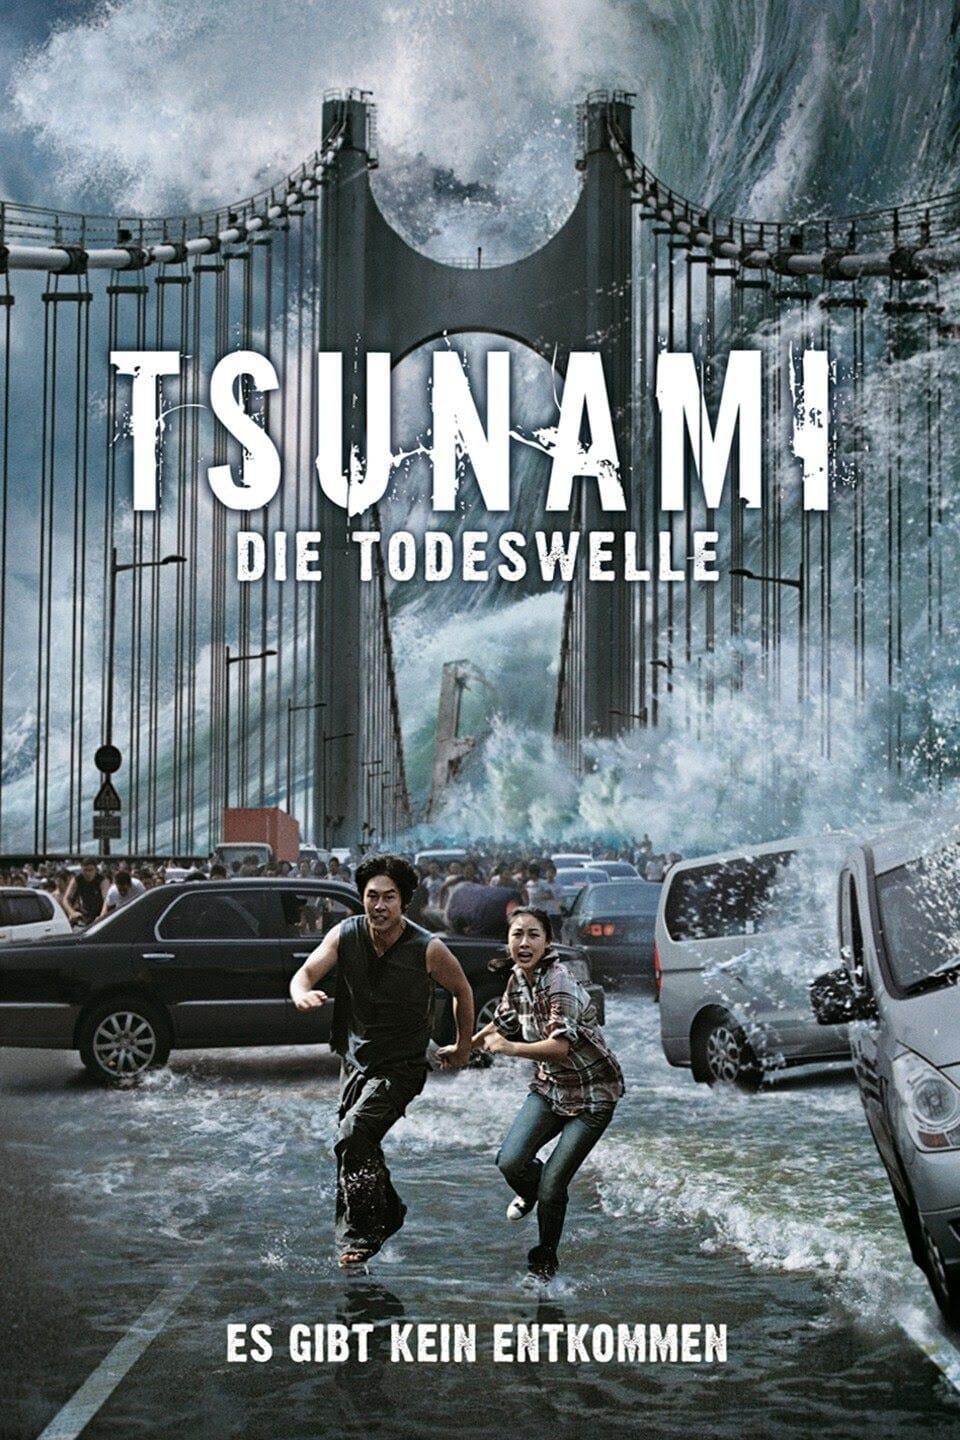 Tsunami - Die Todeswelle poster